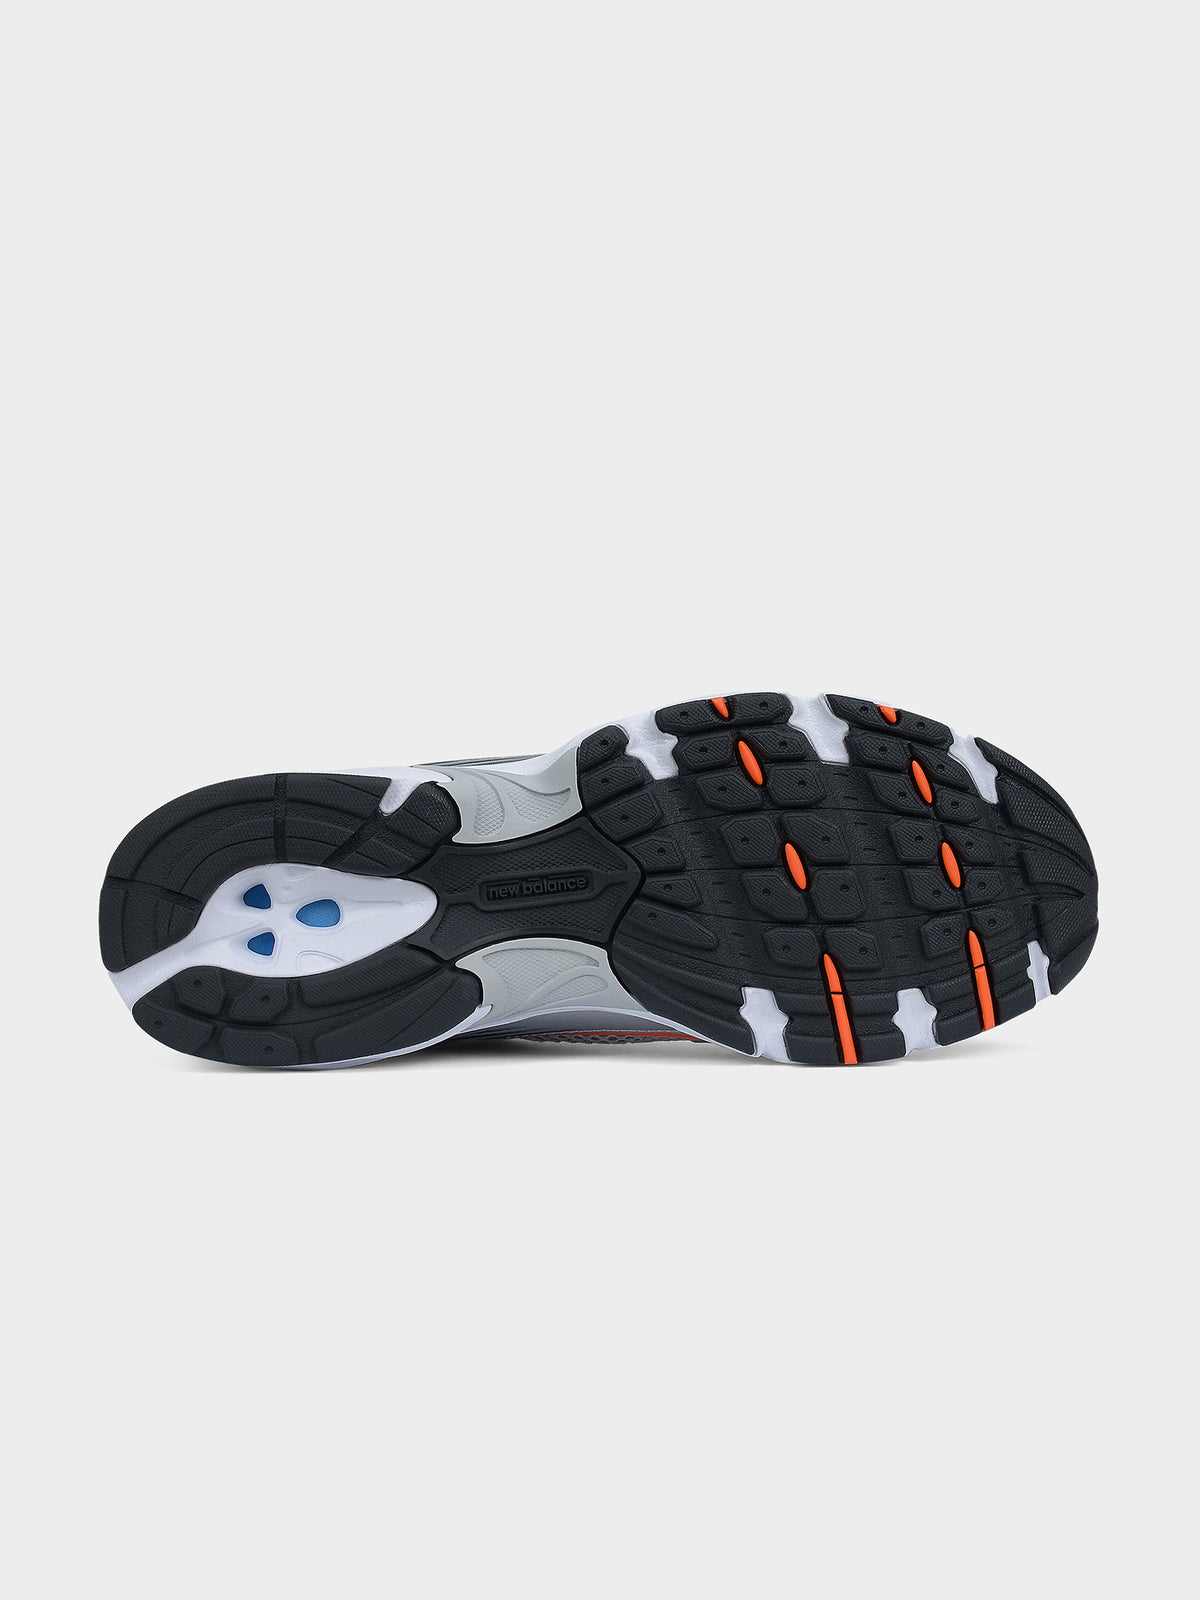 Unisex 530 Sneakers in White &amp; Orange